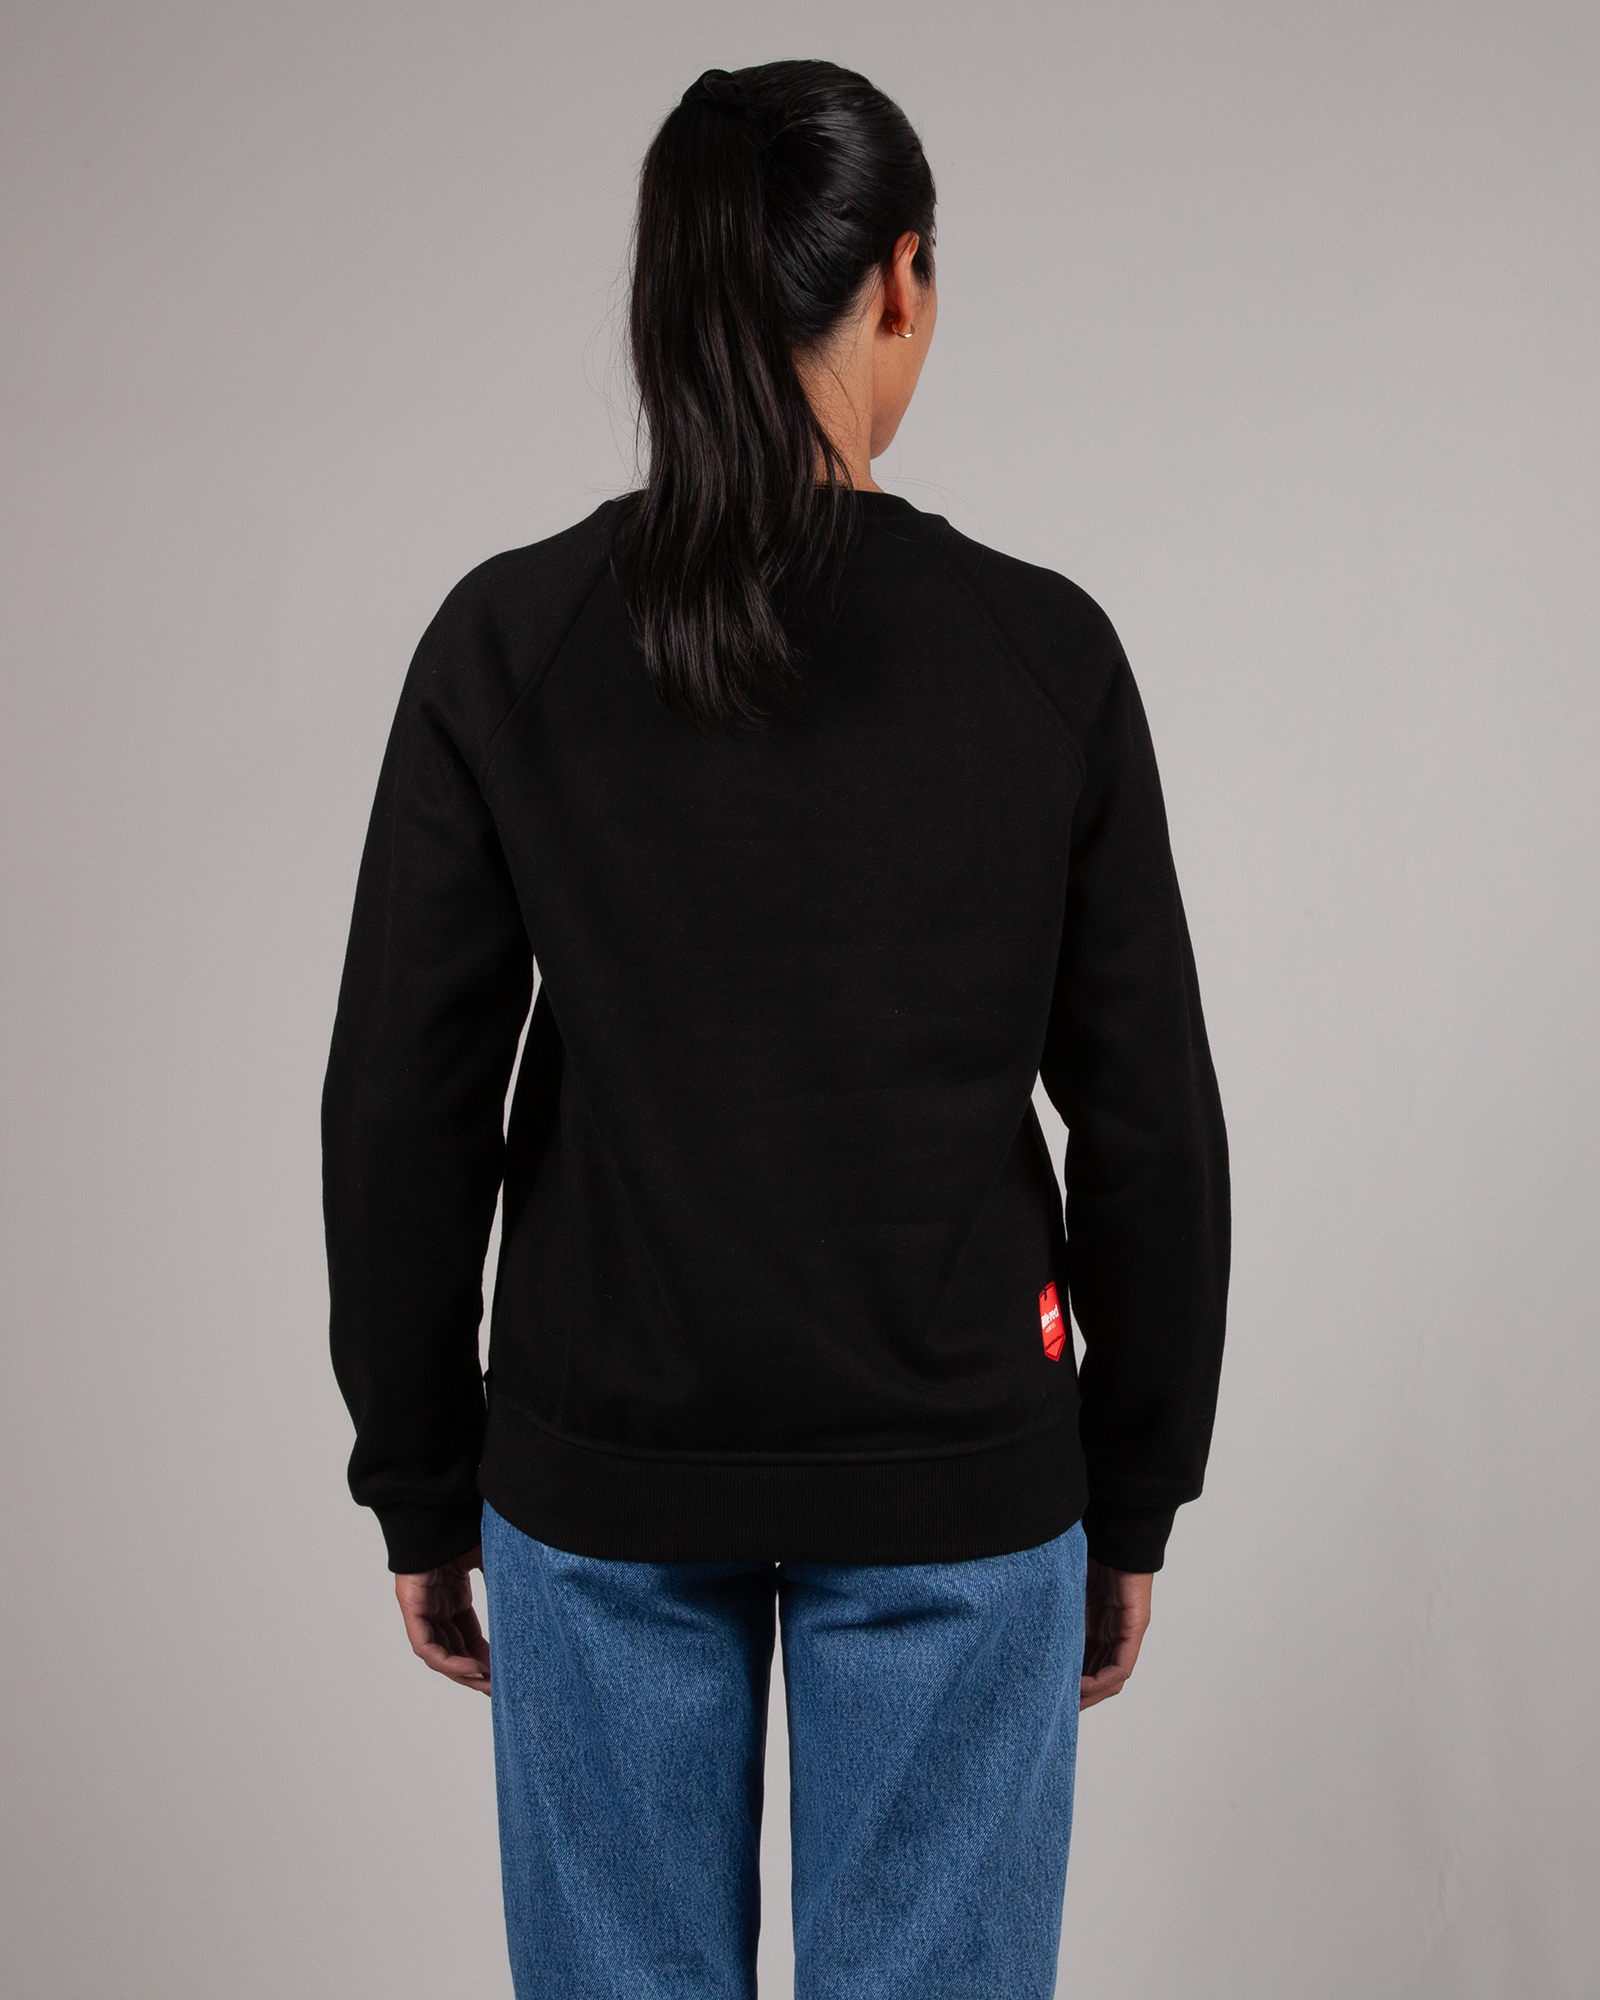 "Catch Some Clean Air" Female Crewneck Sweater - Black